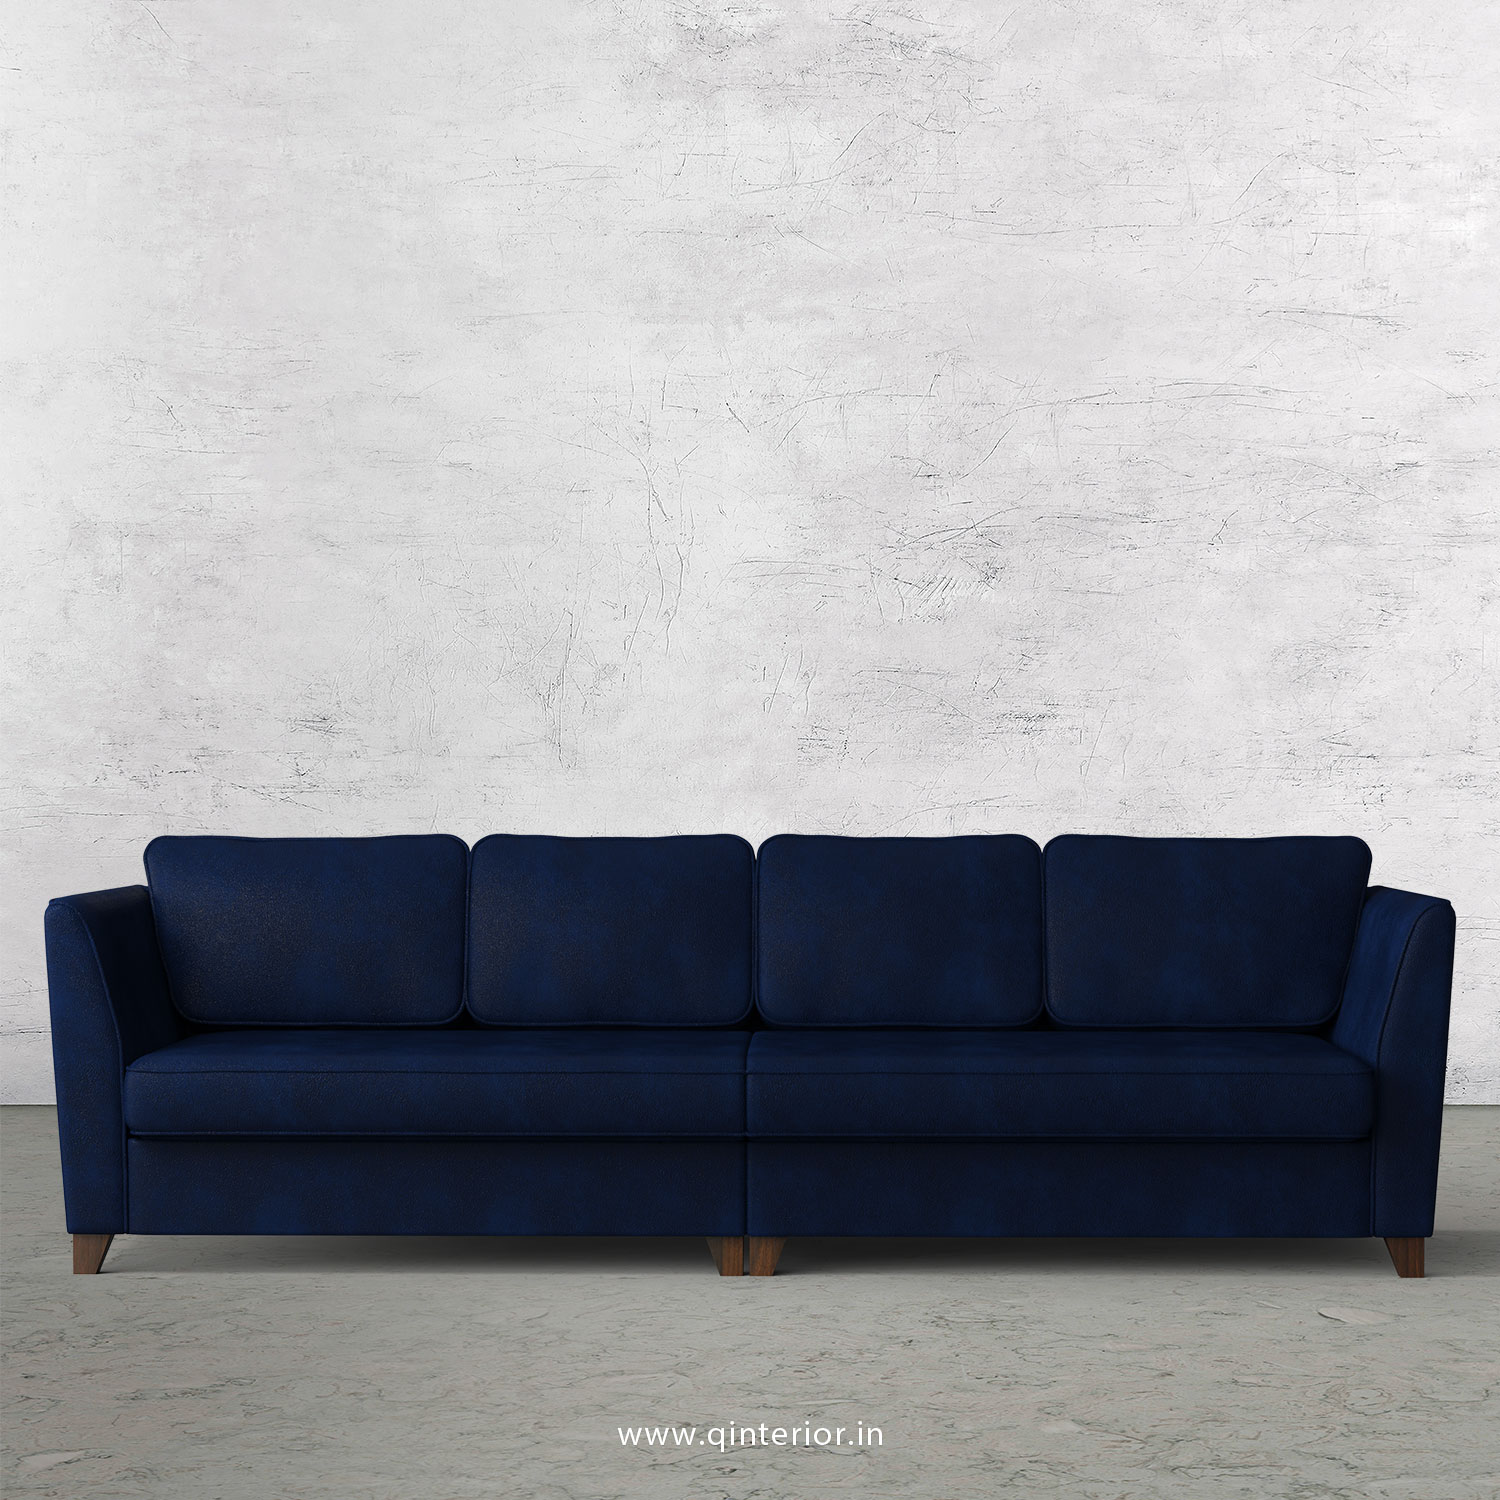 Kingstone 4 Seater Sofa in Fab Leather Fabric - SFA004 FL13